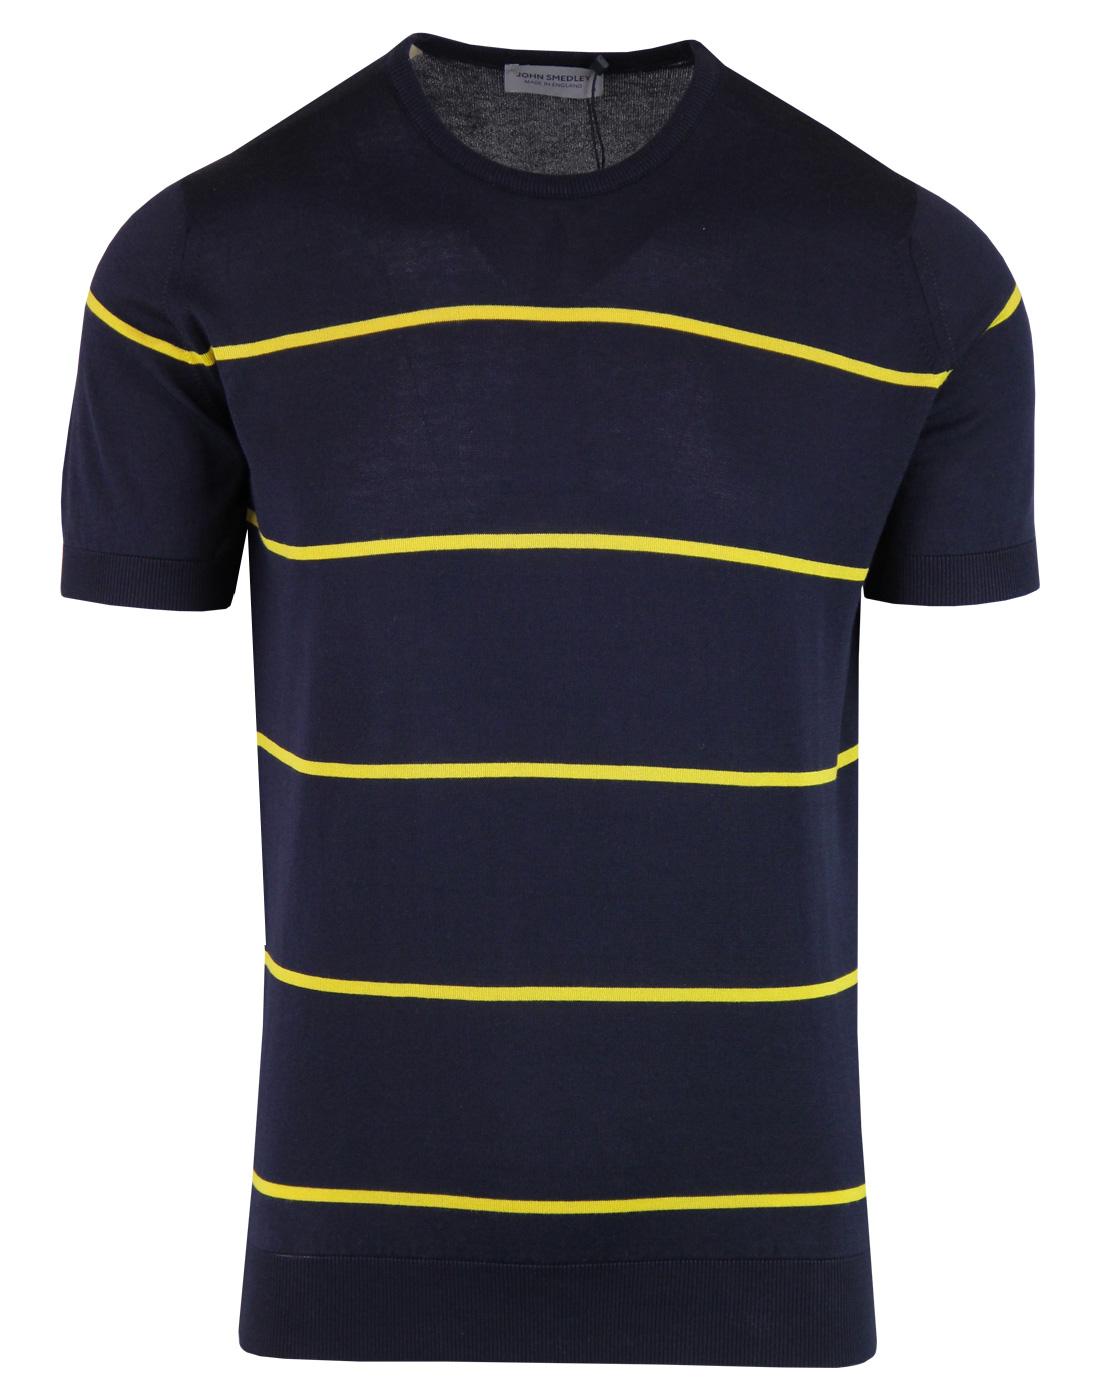 JOHN SMEDLEY Barlby Retro Mod Striped Knit T-Shirt in Navy